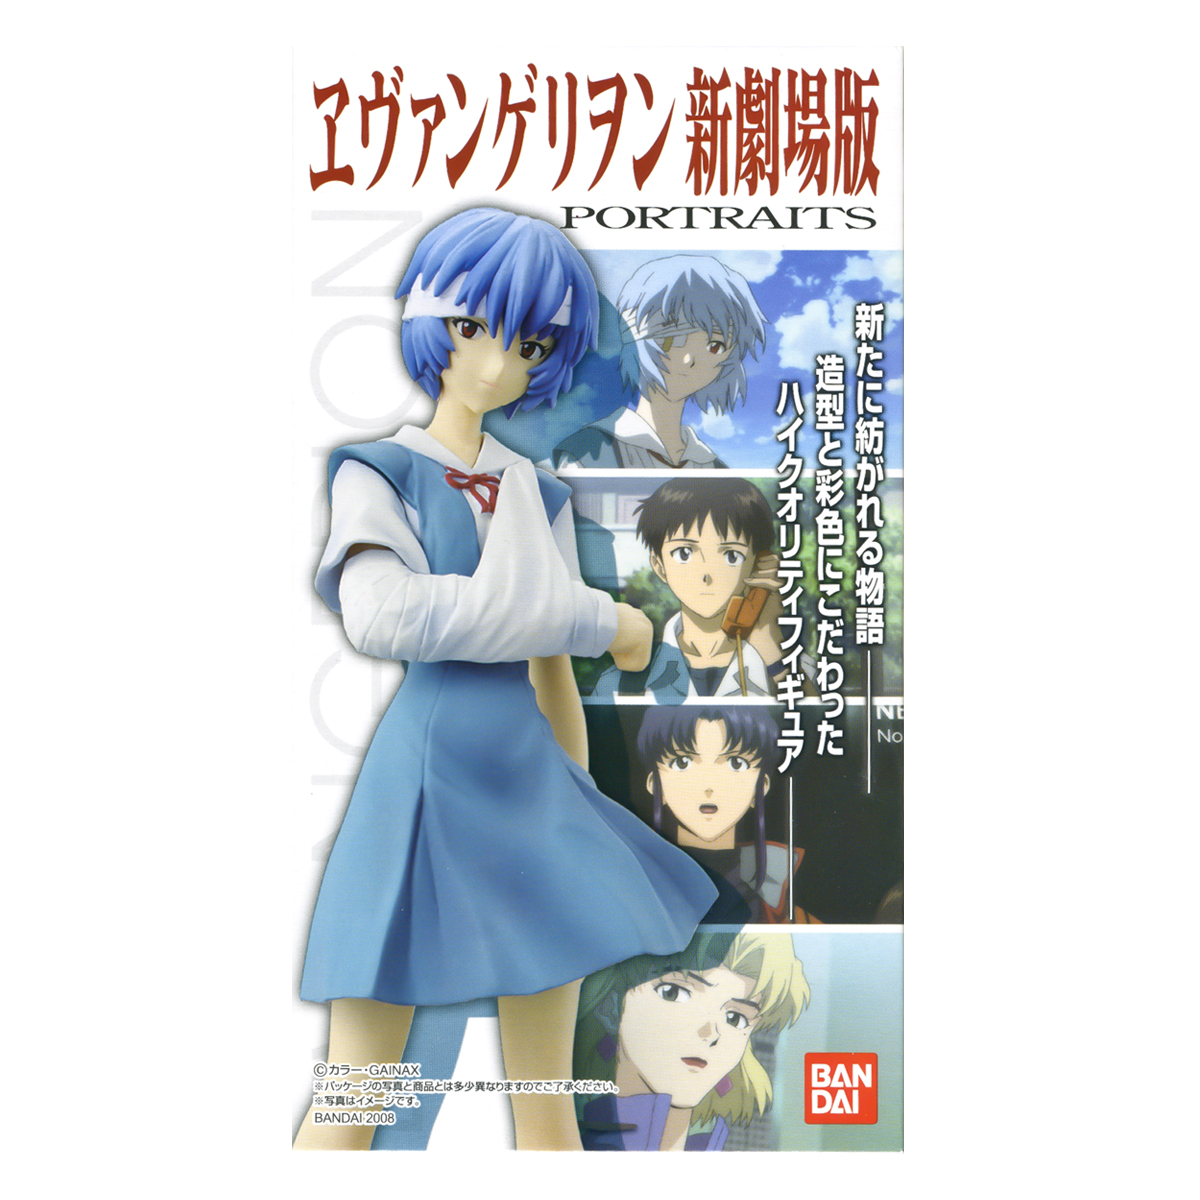 Evangelion Portraits Trading Figure Bandai Anime Random Blind Box #1